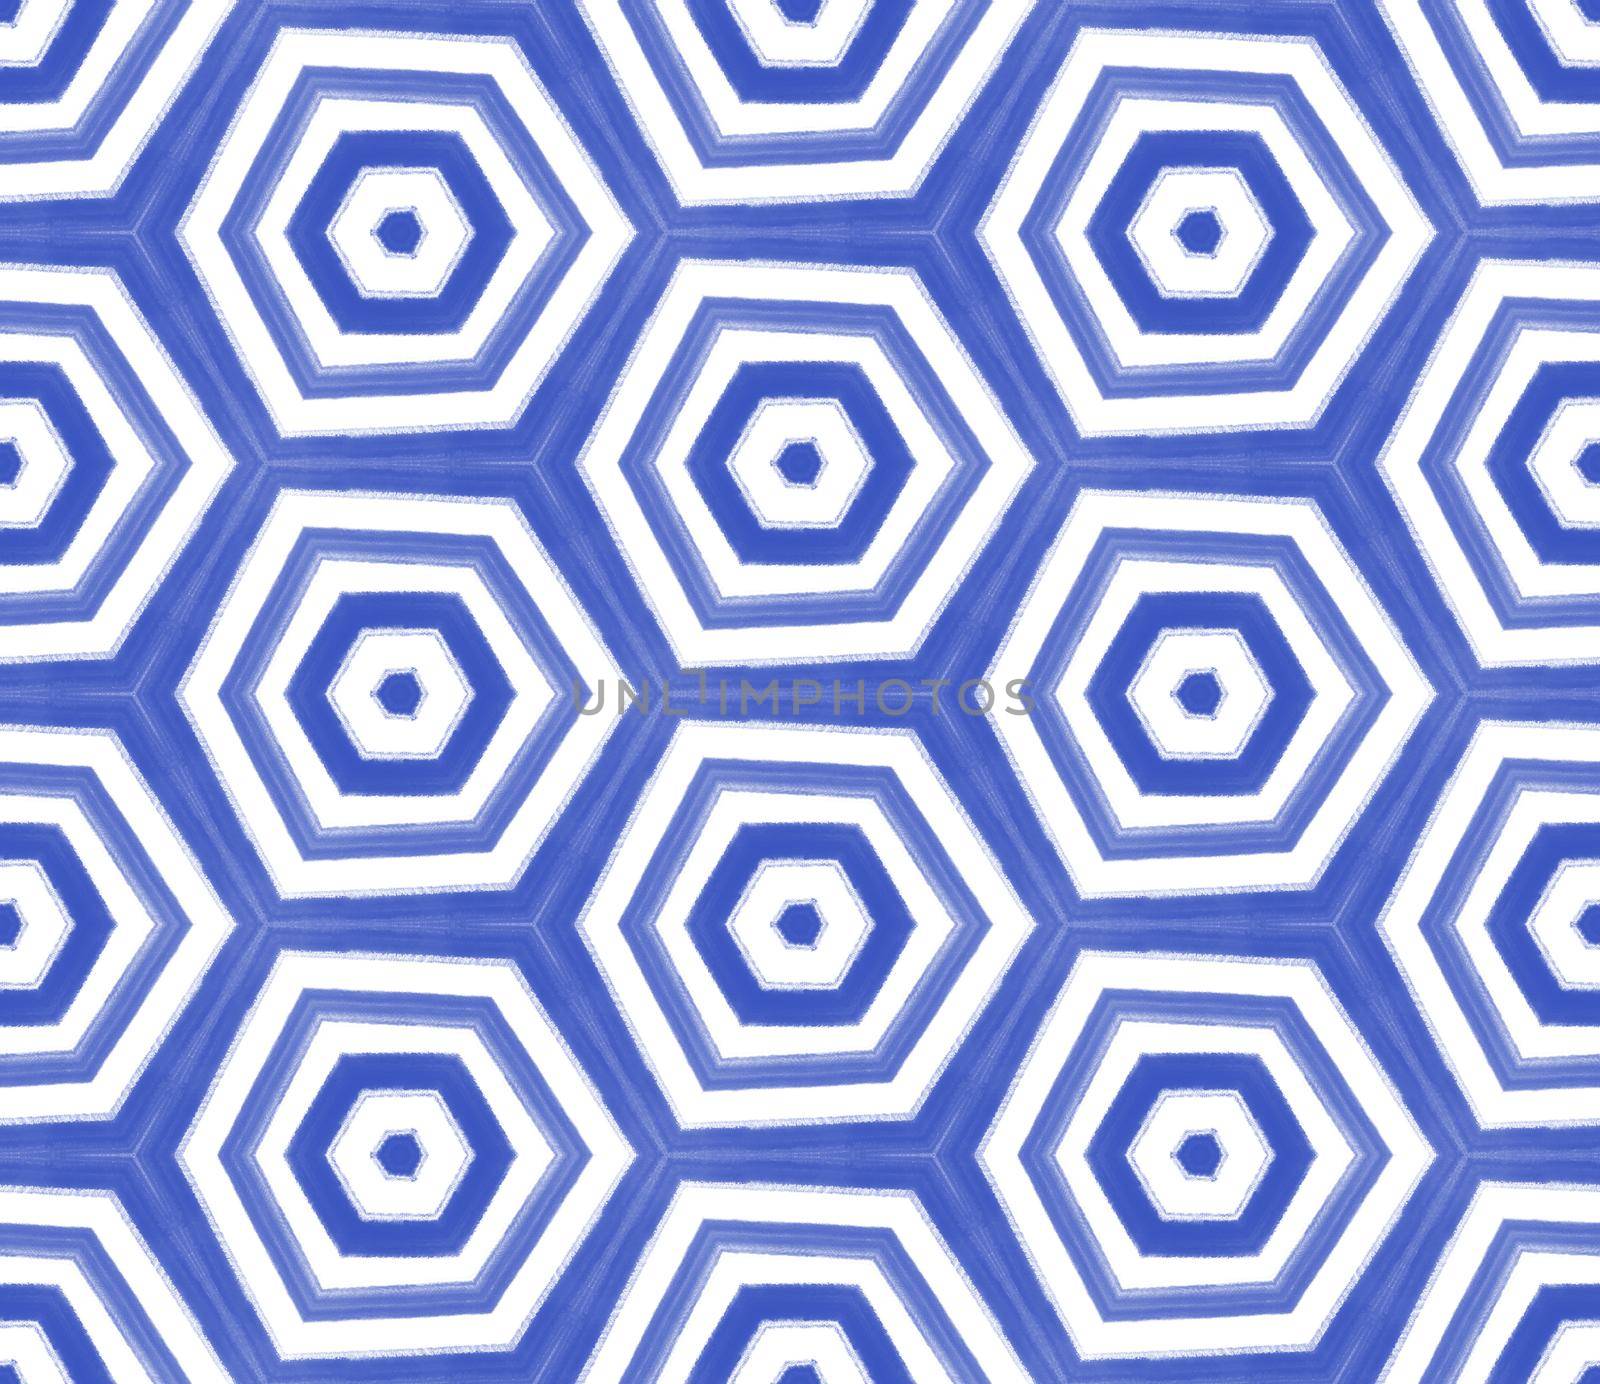 Mosaic seamless pattern. Indigo symmetrical kaleidoscope background. Textile ready imaginative print, swimwear fabric, wallpaper, wrapping. Retro mosaic seamless design.